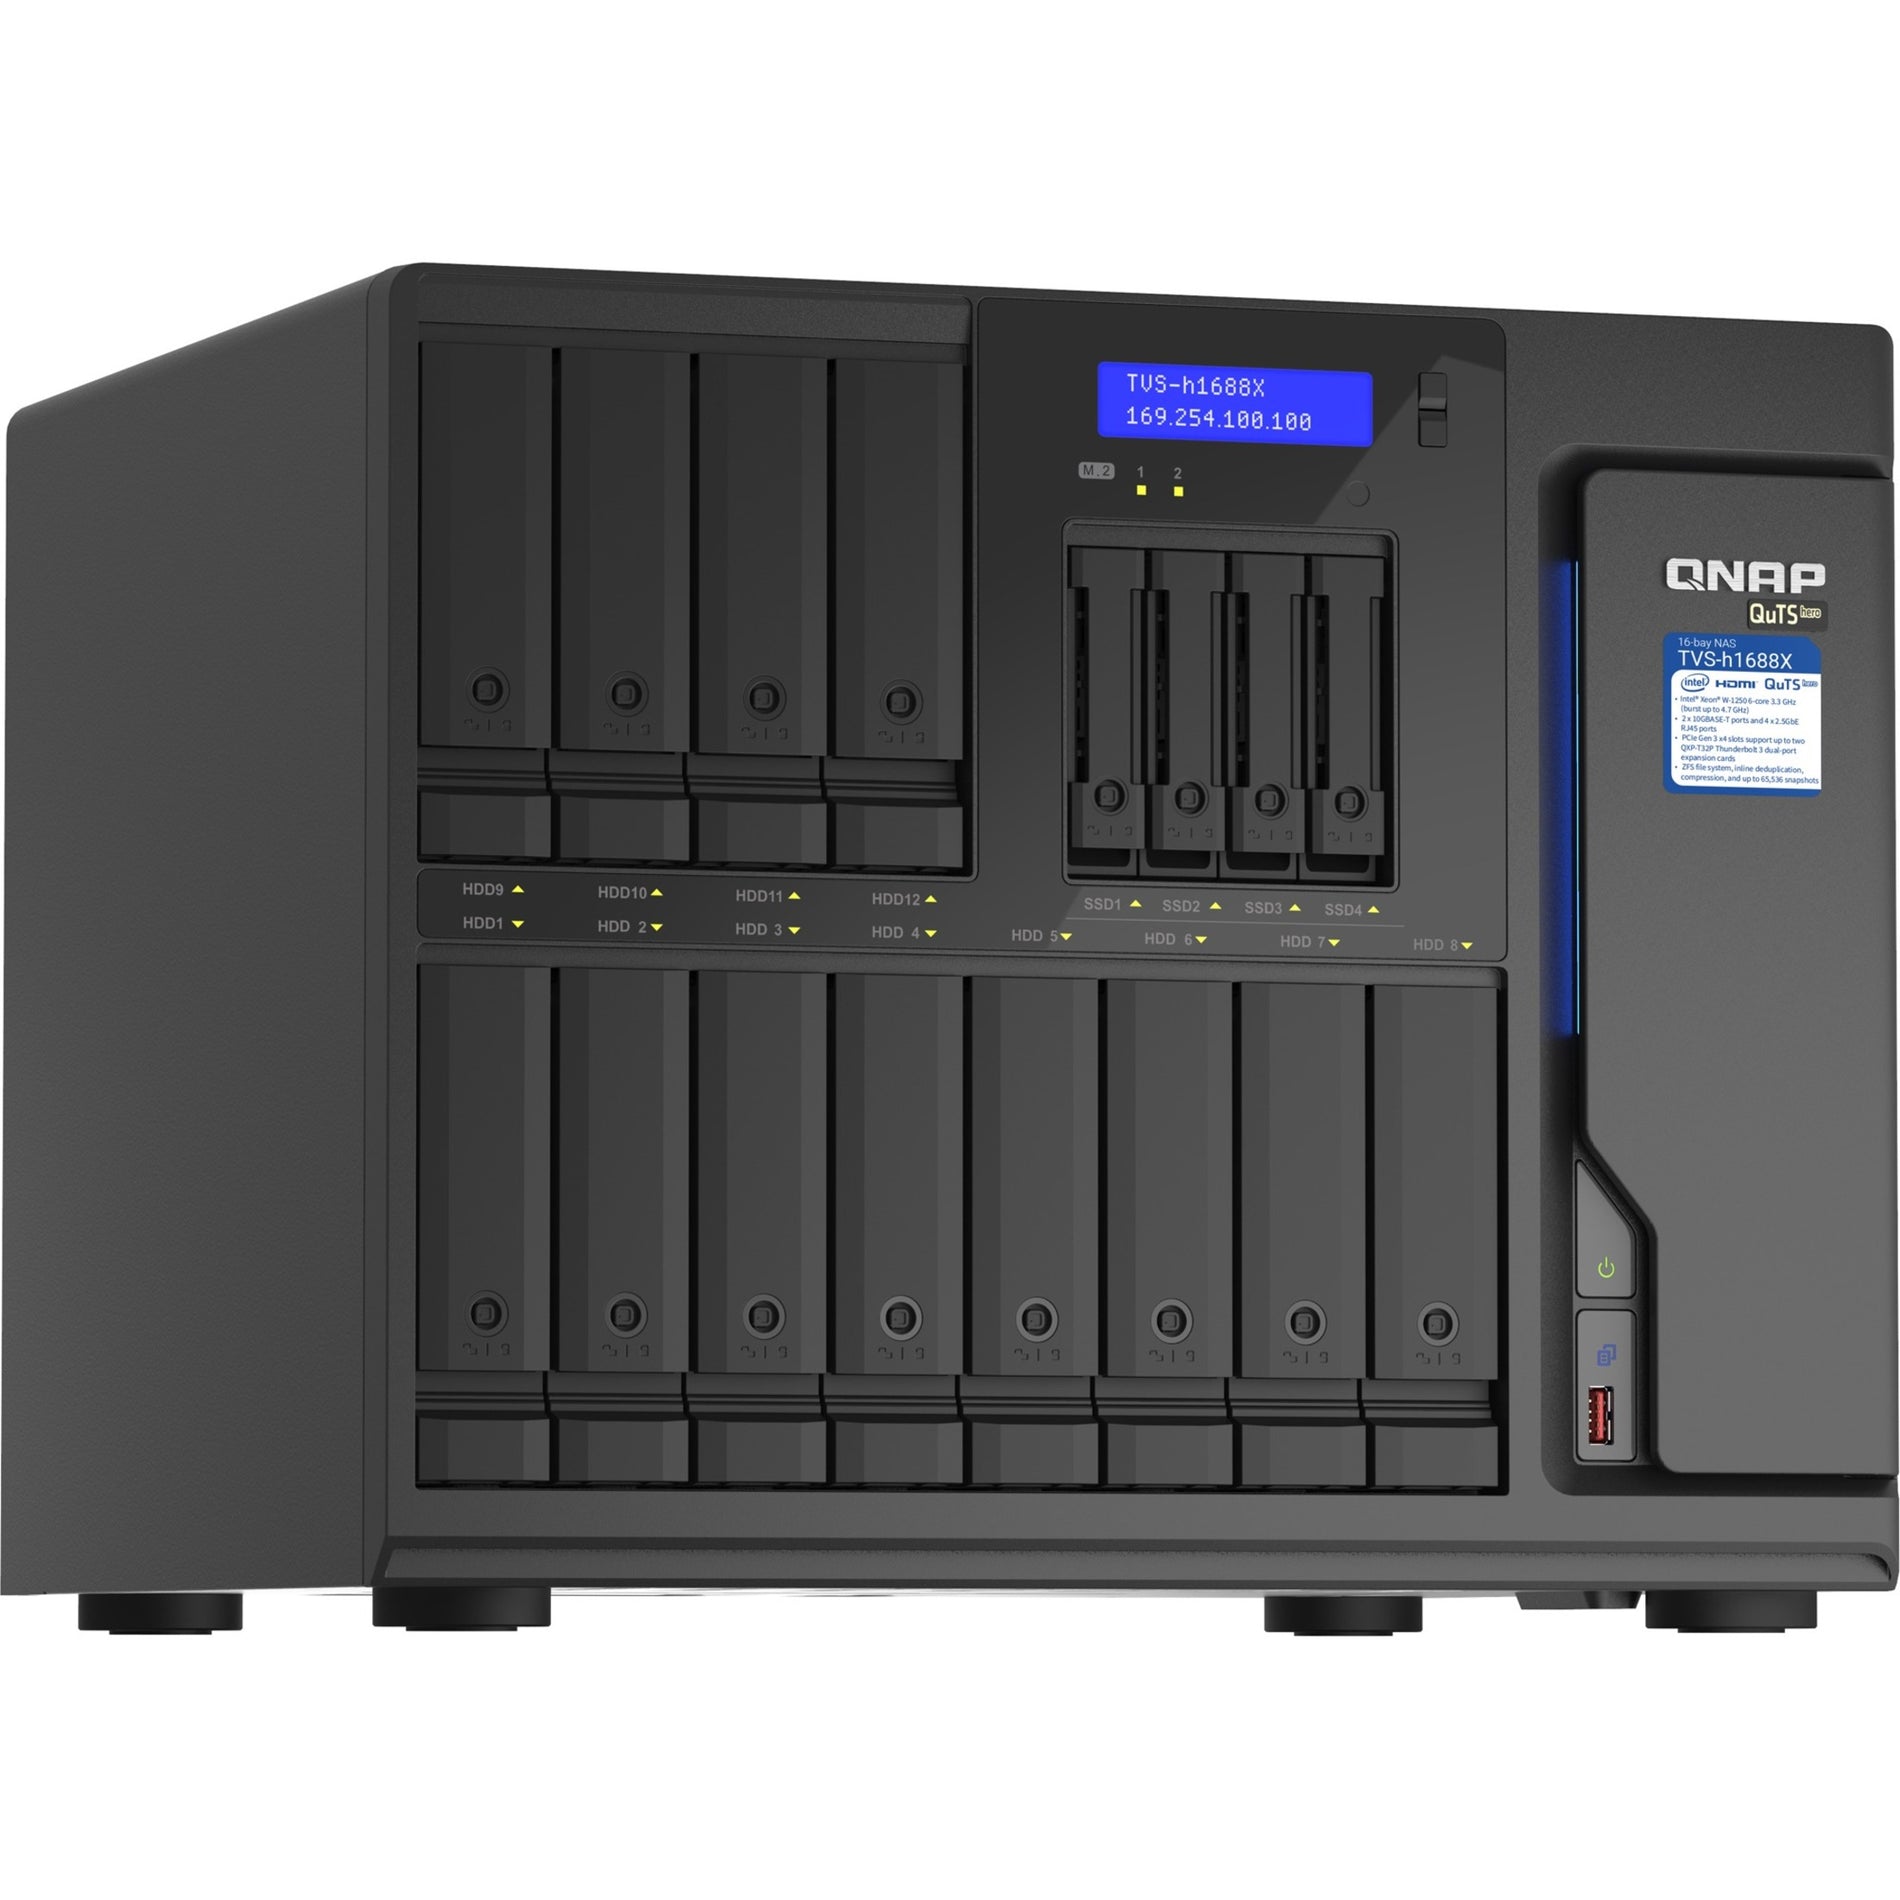 QNAP TVS-H1688X-W1250-32G SAN/NAS Storage System TVS-H1688XW125032GUS, 32GB DDR4, QuTS hero 4.5.0, 3 Year Warranty